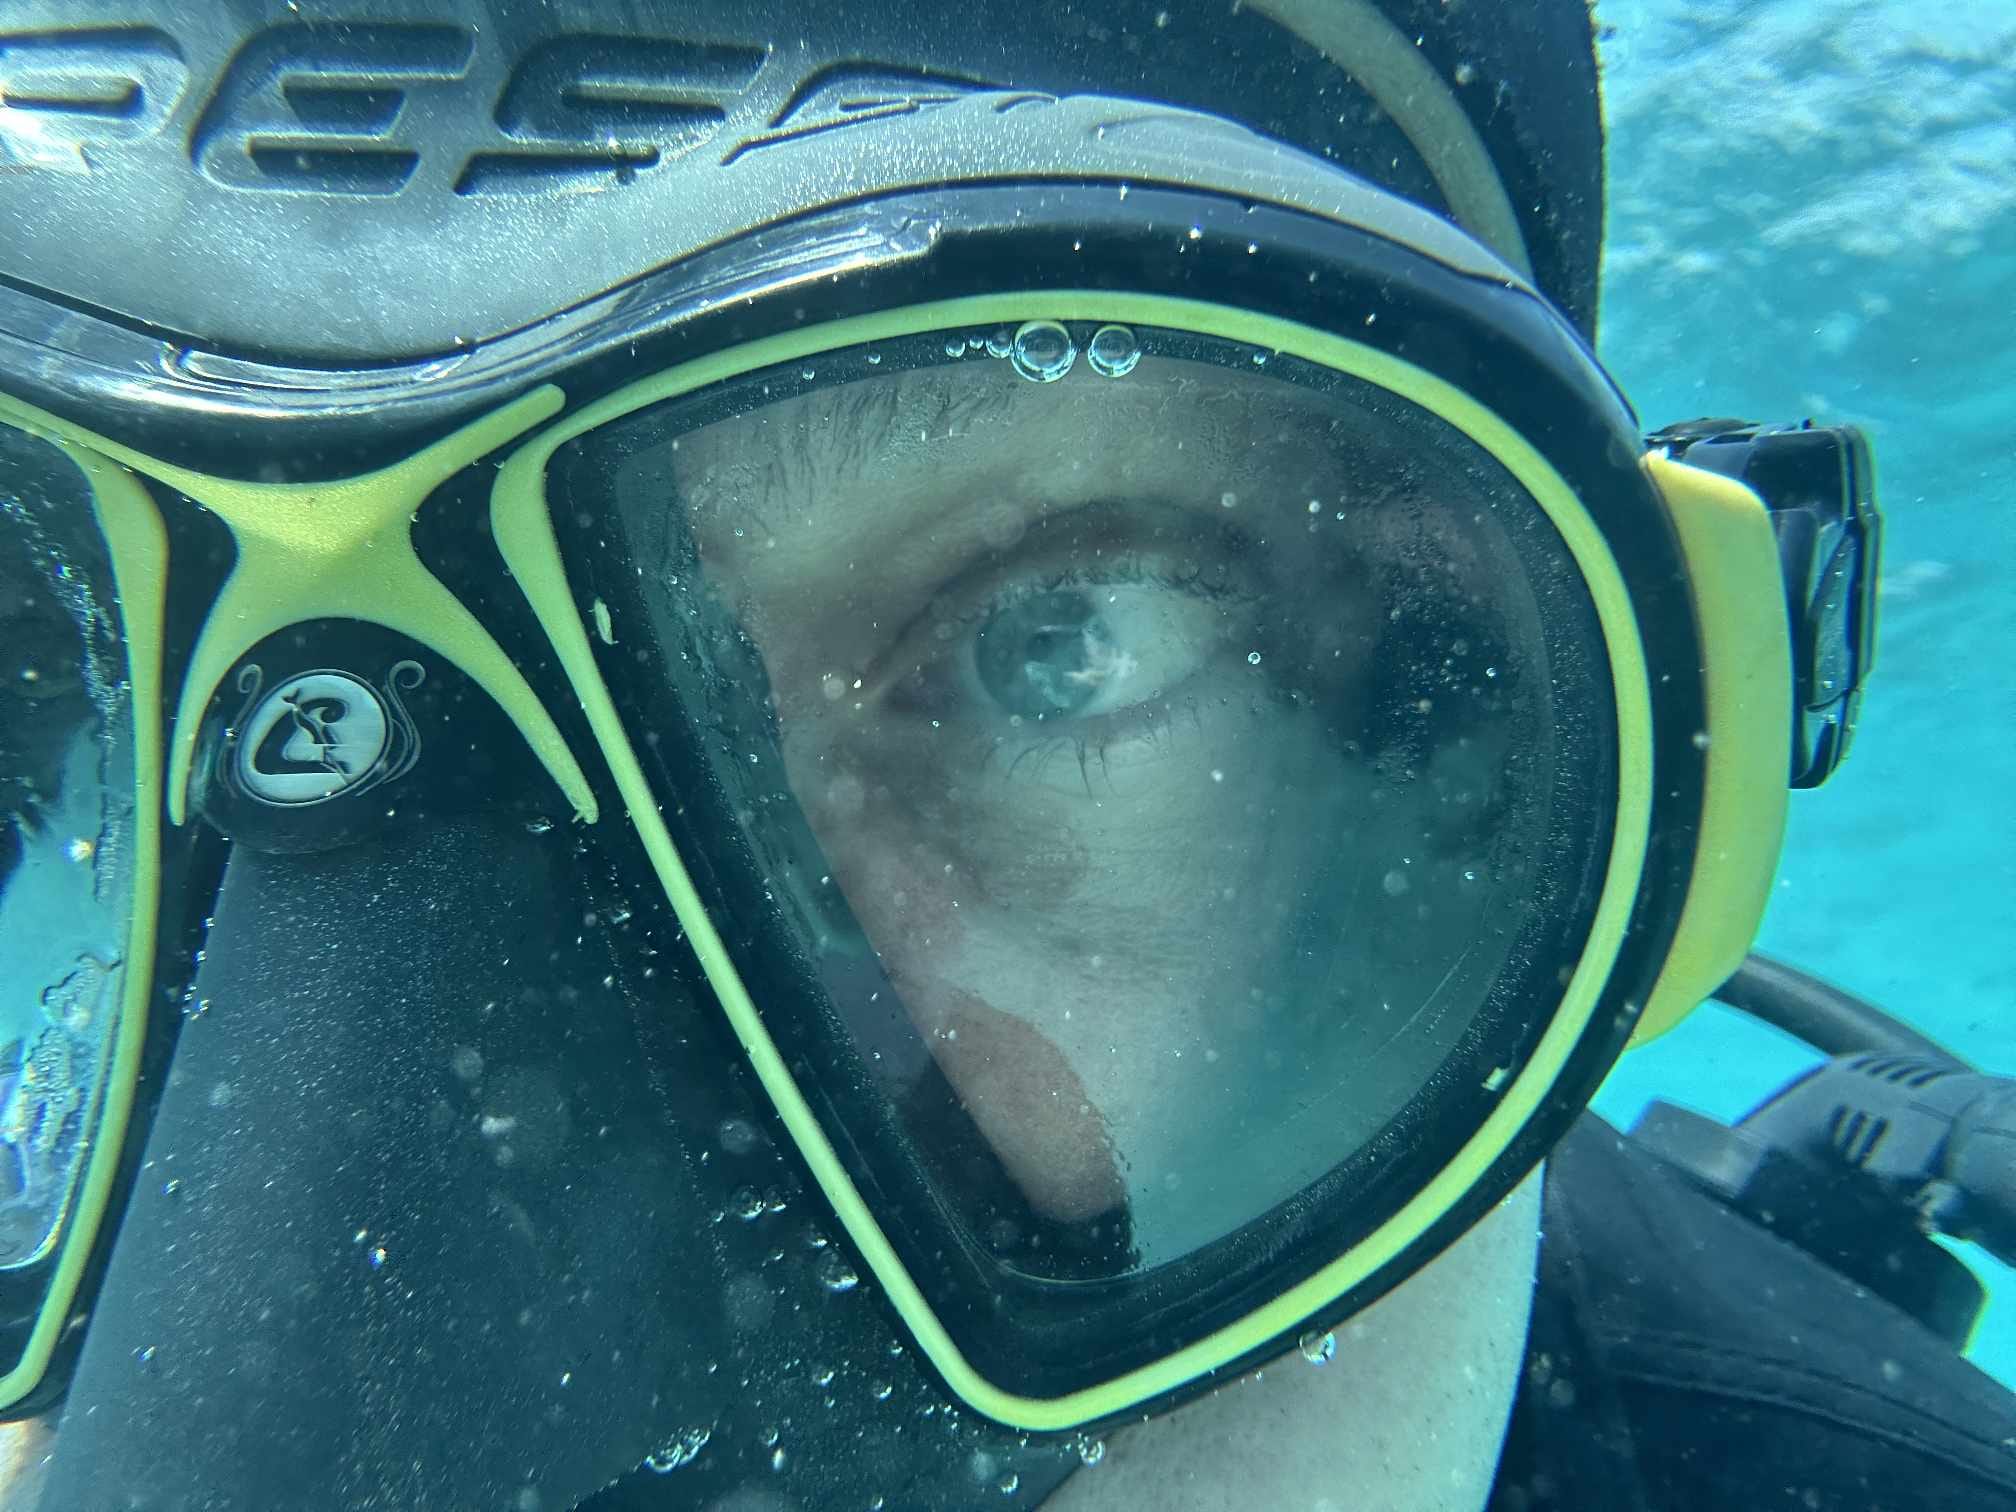 A diver recommends the Cressi Zeus diving mask